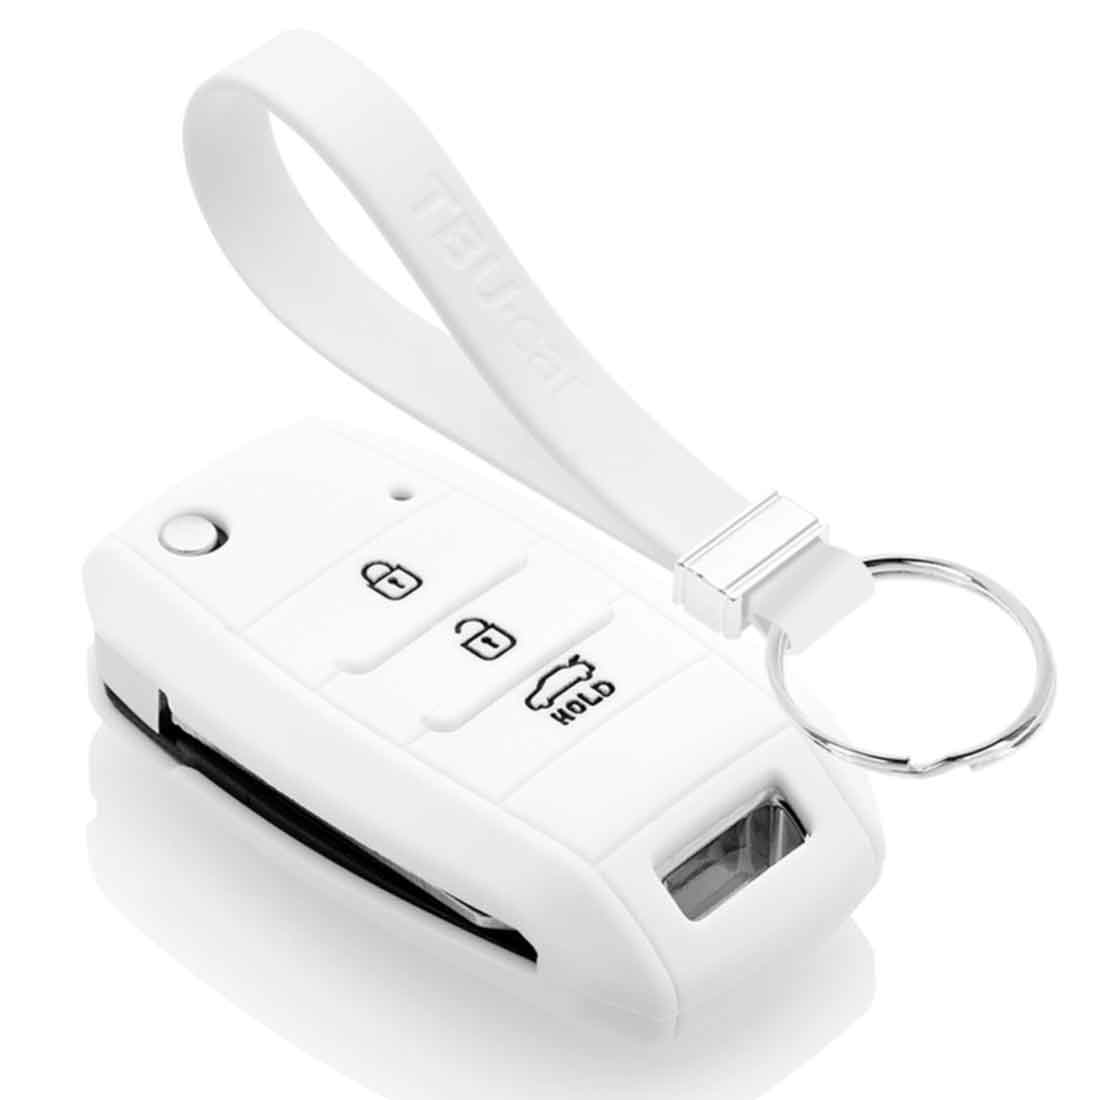 TBU car TBU car Autoschlüssel Hülle kompatibel mit Kia 3 Tasten - Schutzhülle aus Silikon - Auto Schlüsselhülle Cover in Weiß